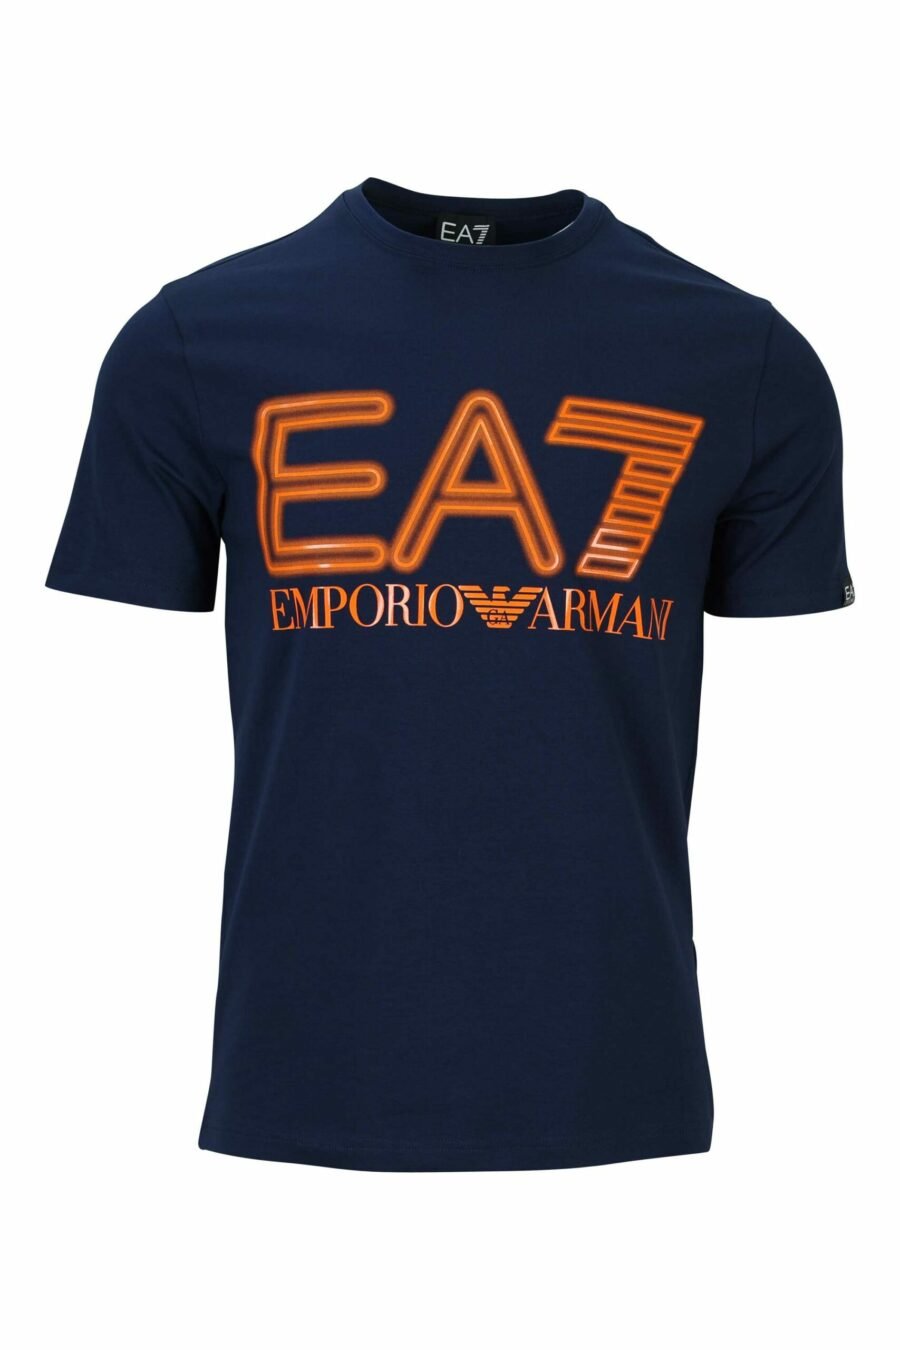 T-shirt bleu foncé avec maxilogo "lux identity" orange fluo - 8058947491445 scaled